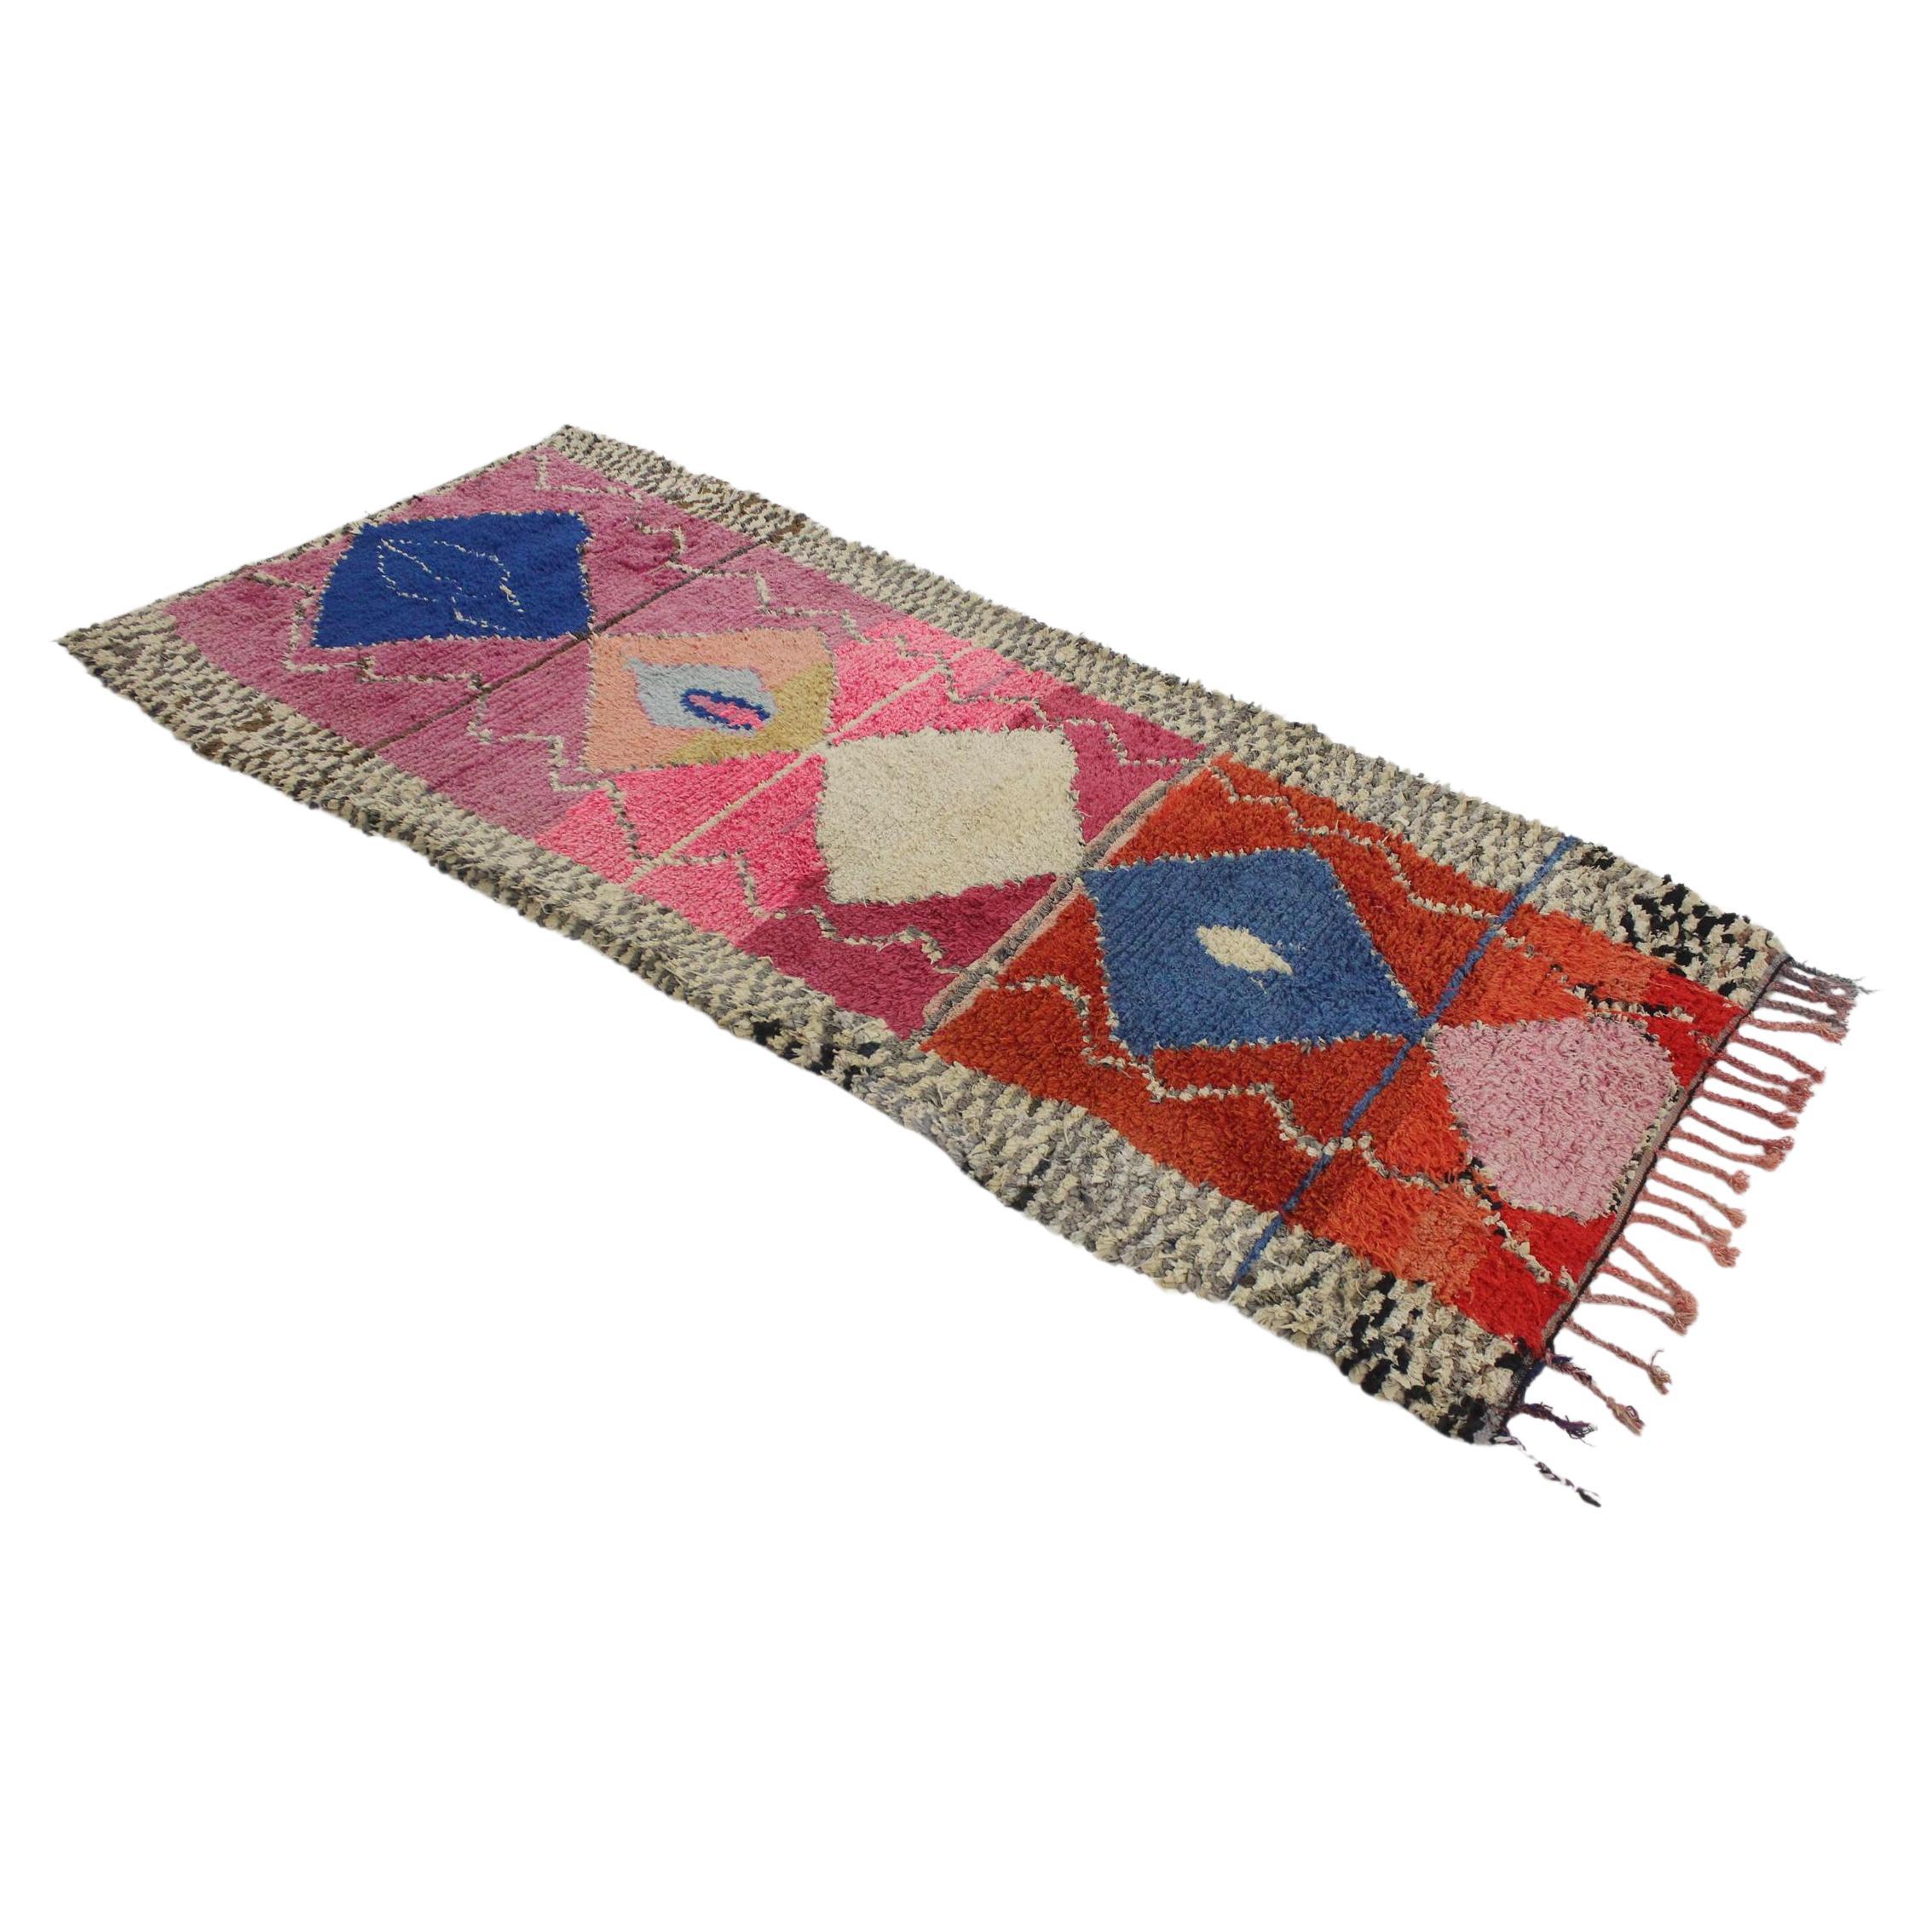 Vintage Moroccan Boucherouite rug- Pink/blue - 3.4x7.4feet / 105x227cm